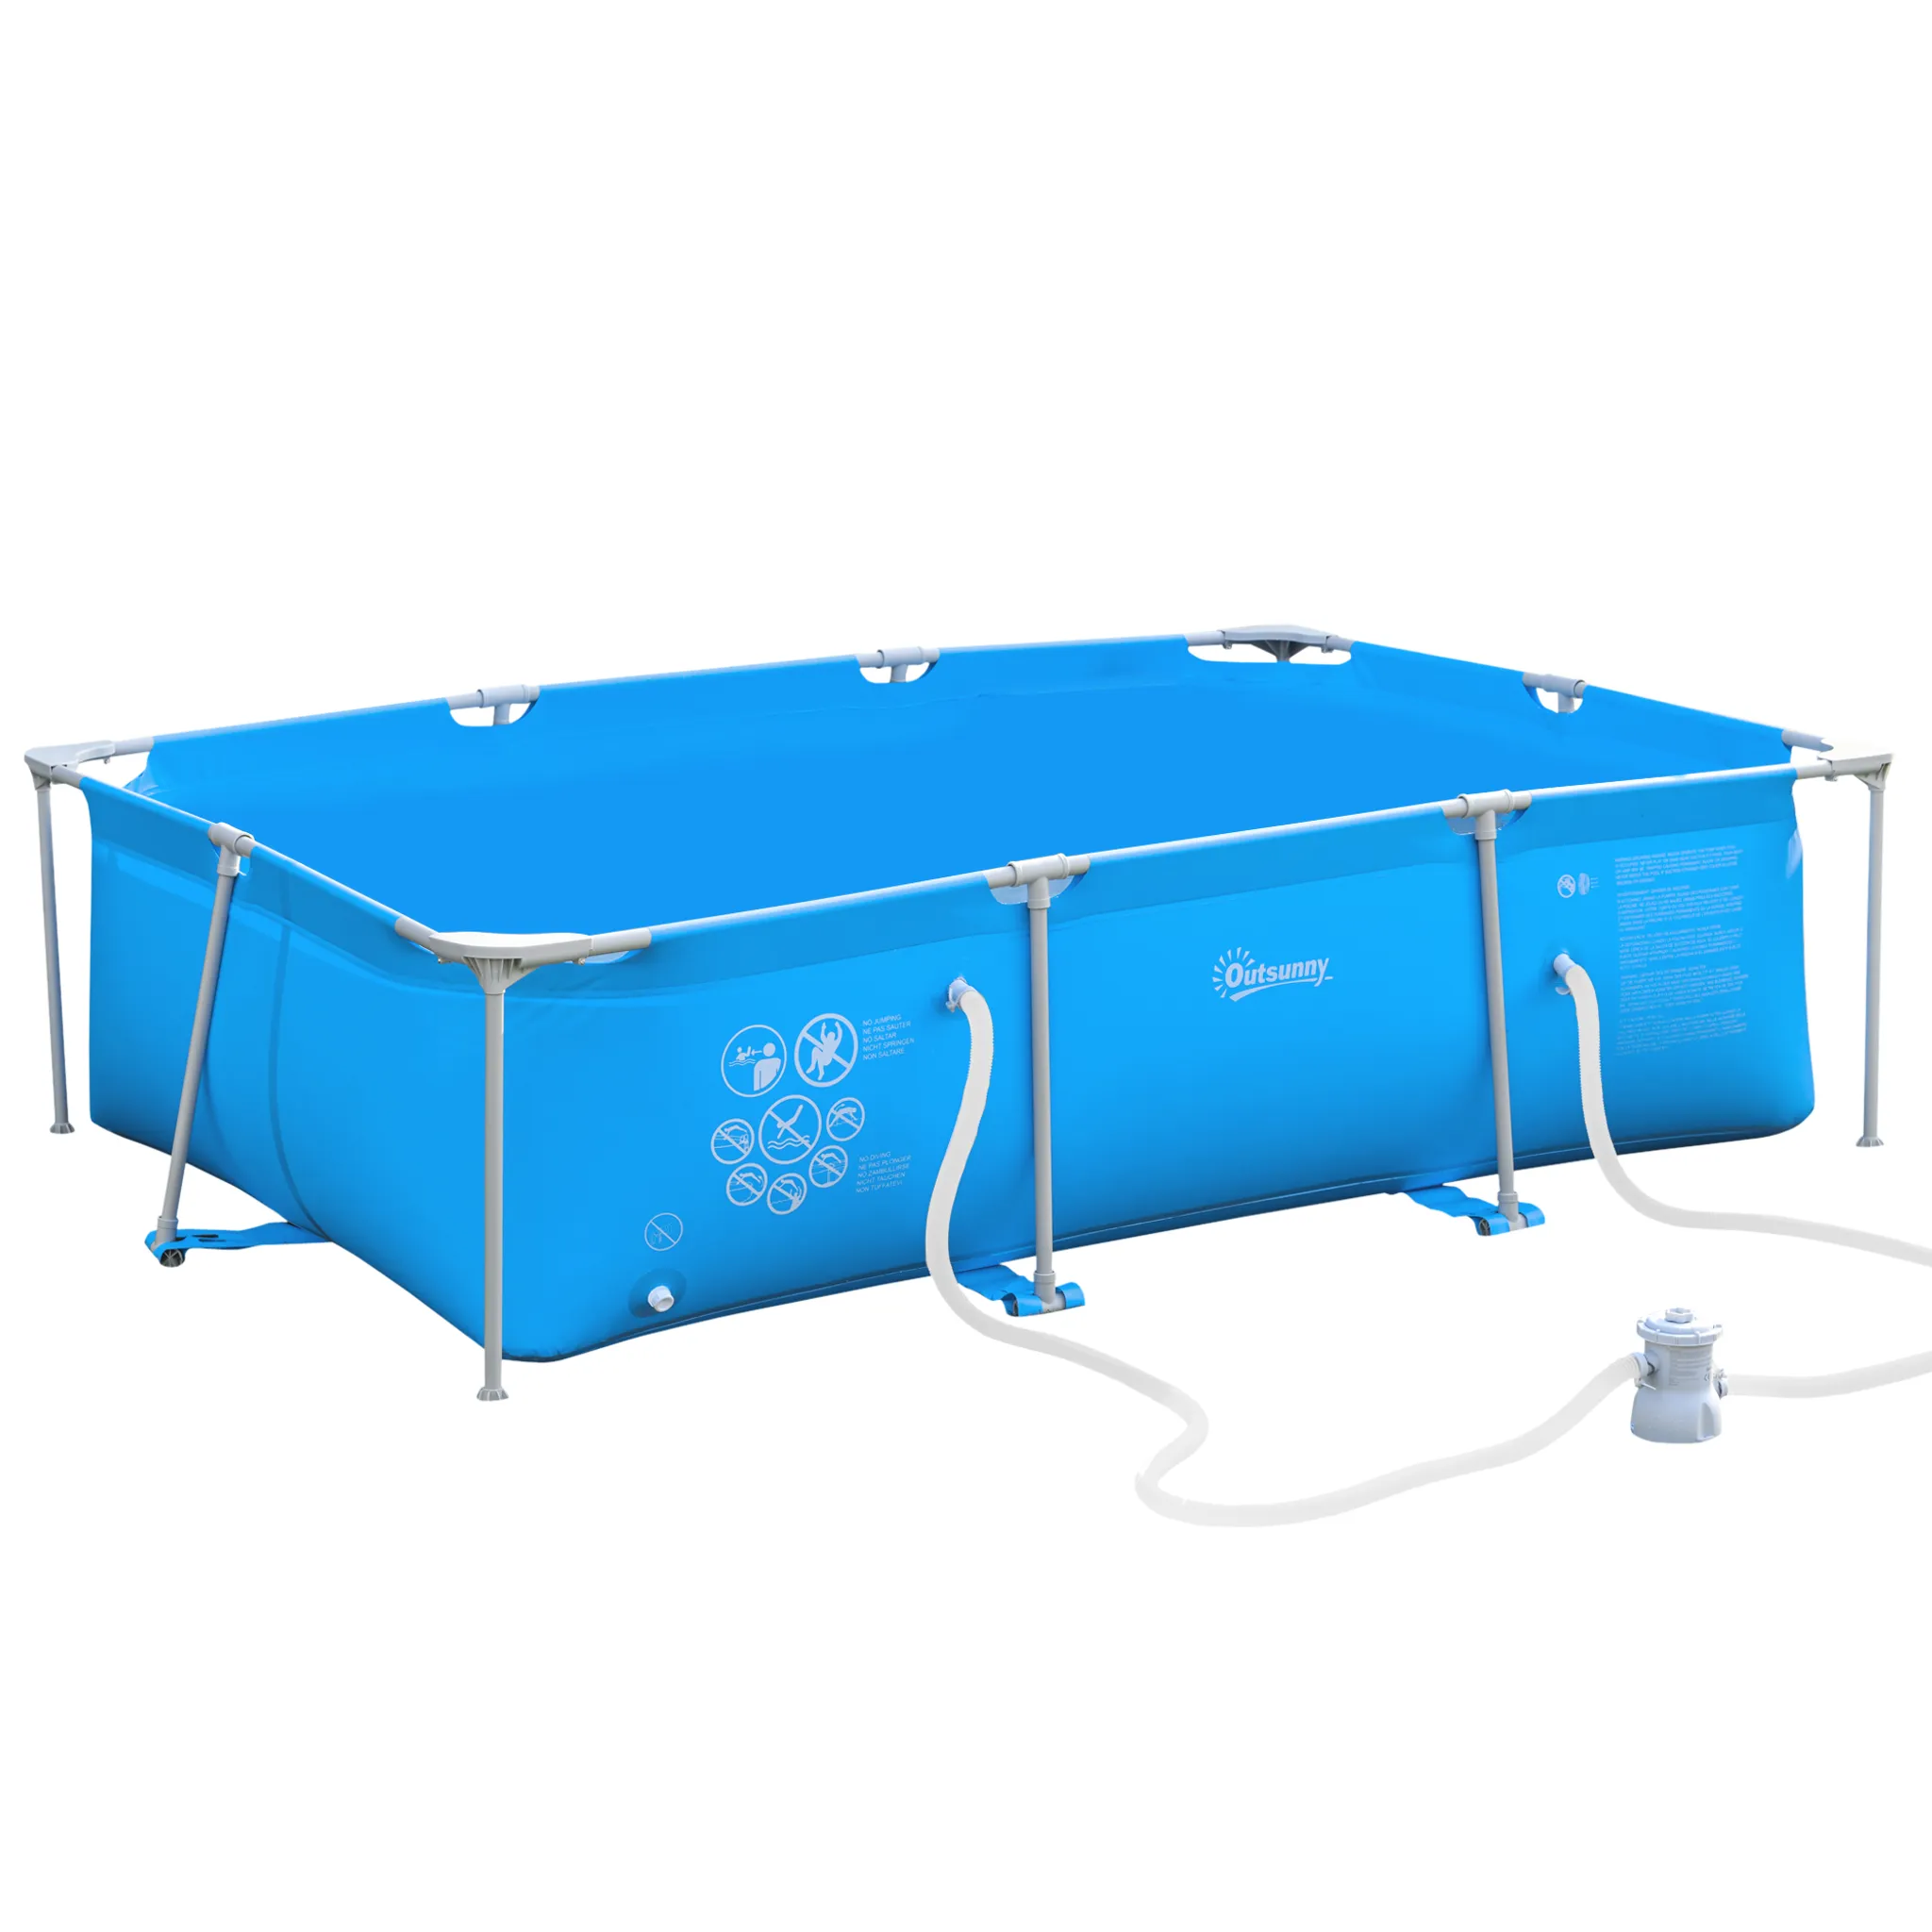 Stahl PVC Schwimmbad mit Draht Rahmenpool Outsunny Blau Schlauch Swimmingpool